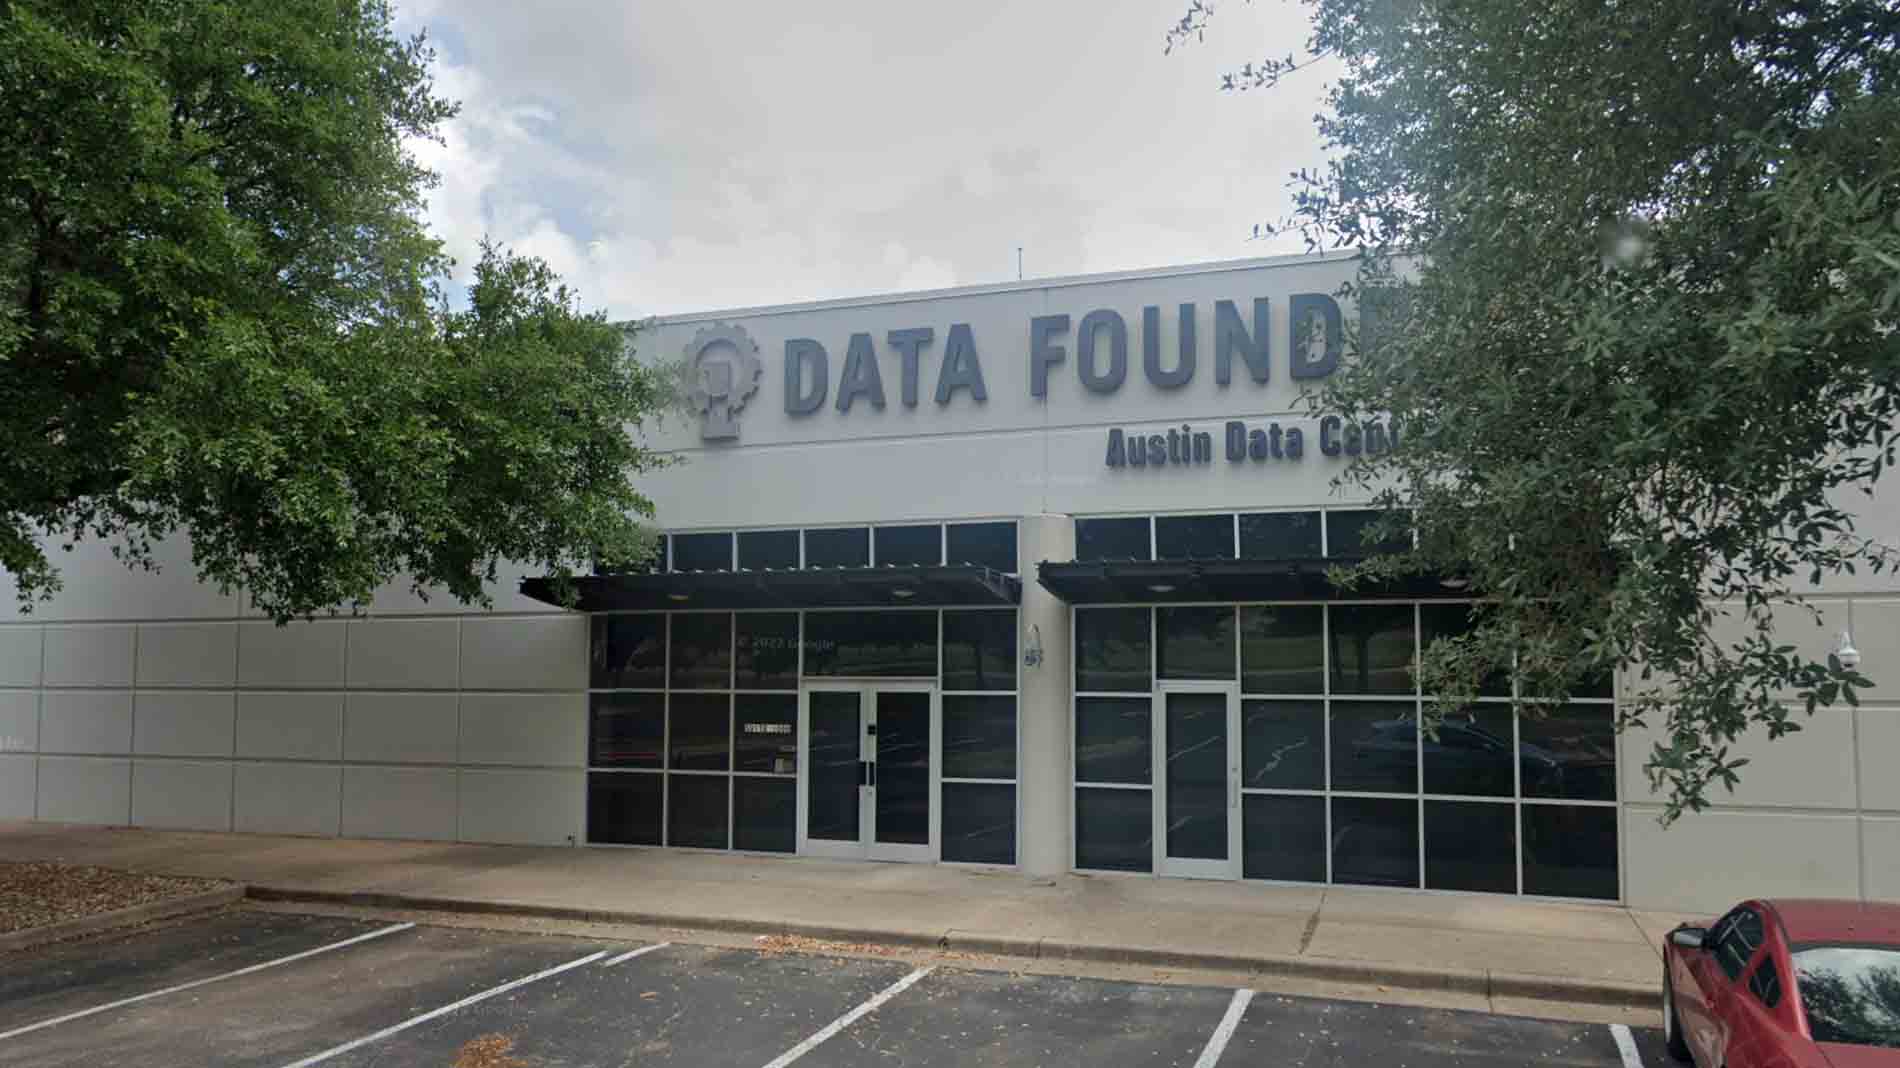 Data Foundry - Austin 1 (Austin Data Center) in Austin